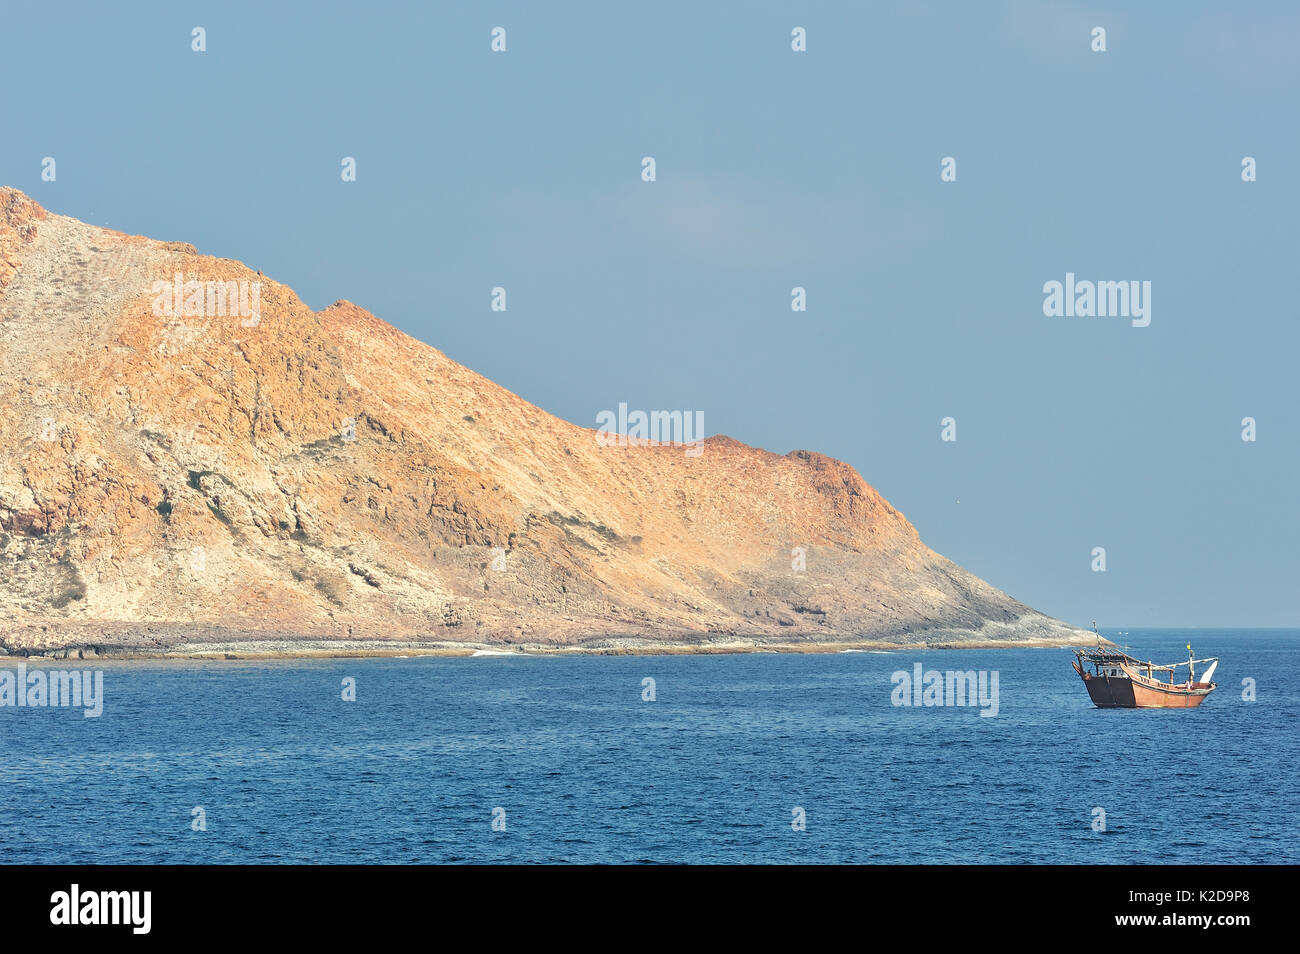 A fishing boat close to Al Qibliyah island, one of the Hallaniyat islands, coast of Dhofar, Oman, Arabian Sea Stock Photo